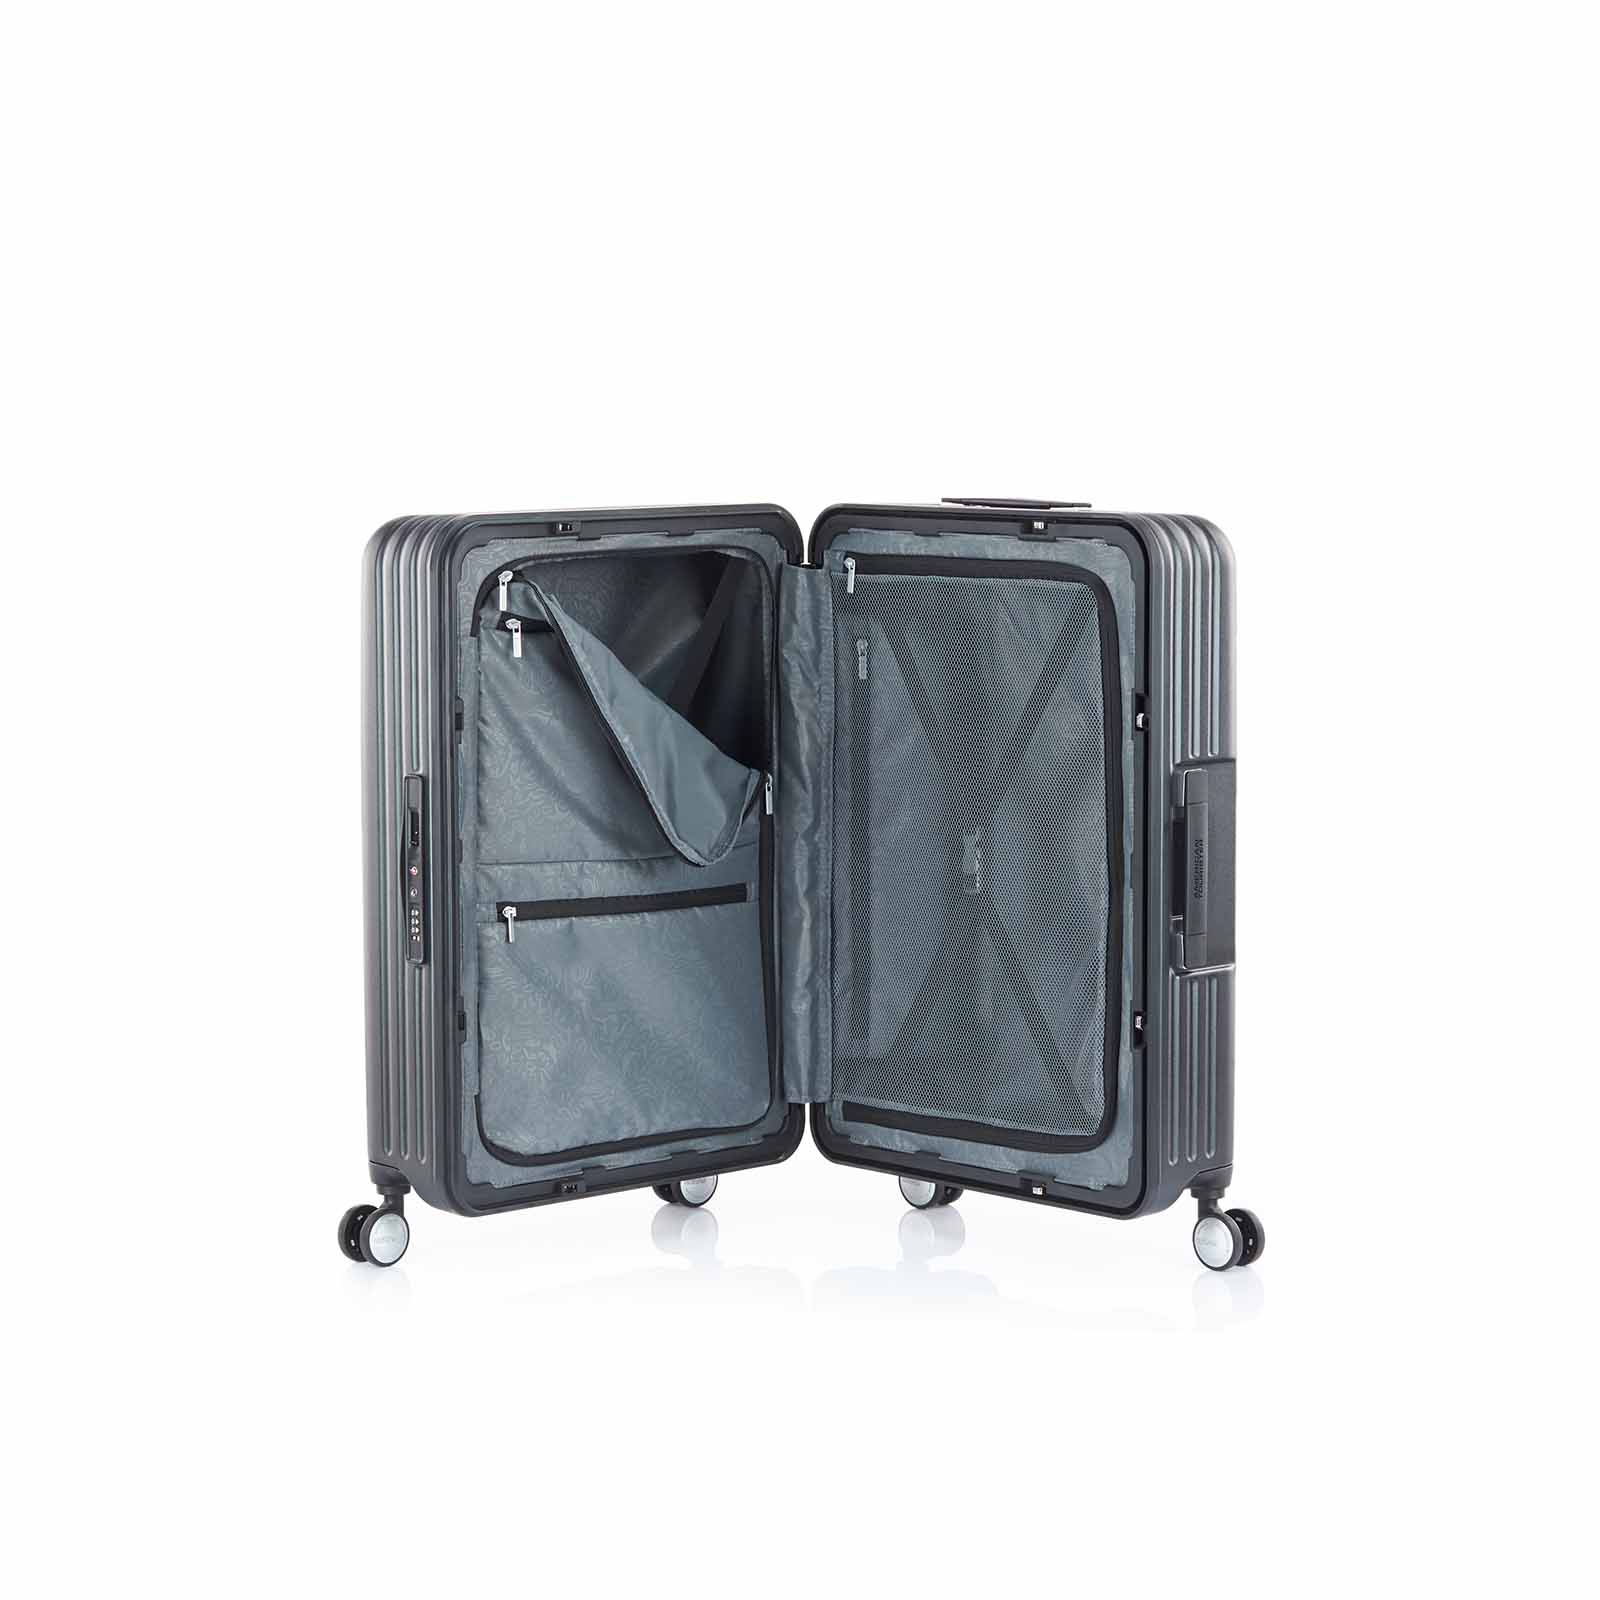 American-Tourister-Lockation-65cm-Suitcase-Black-Open